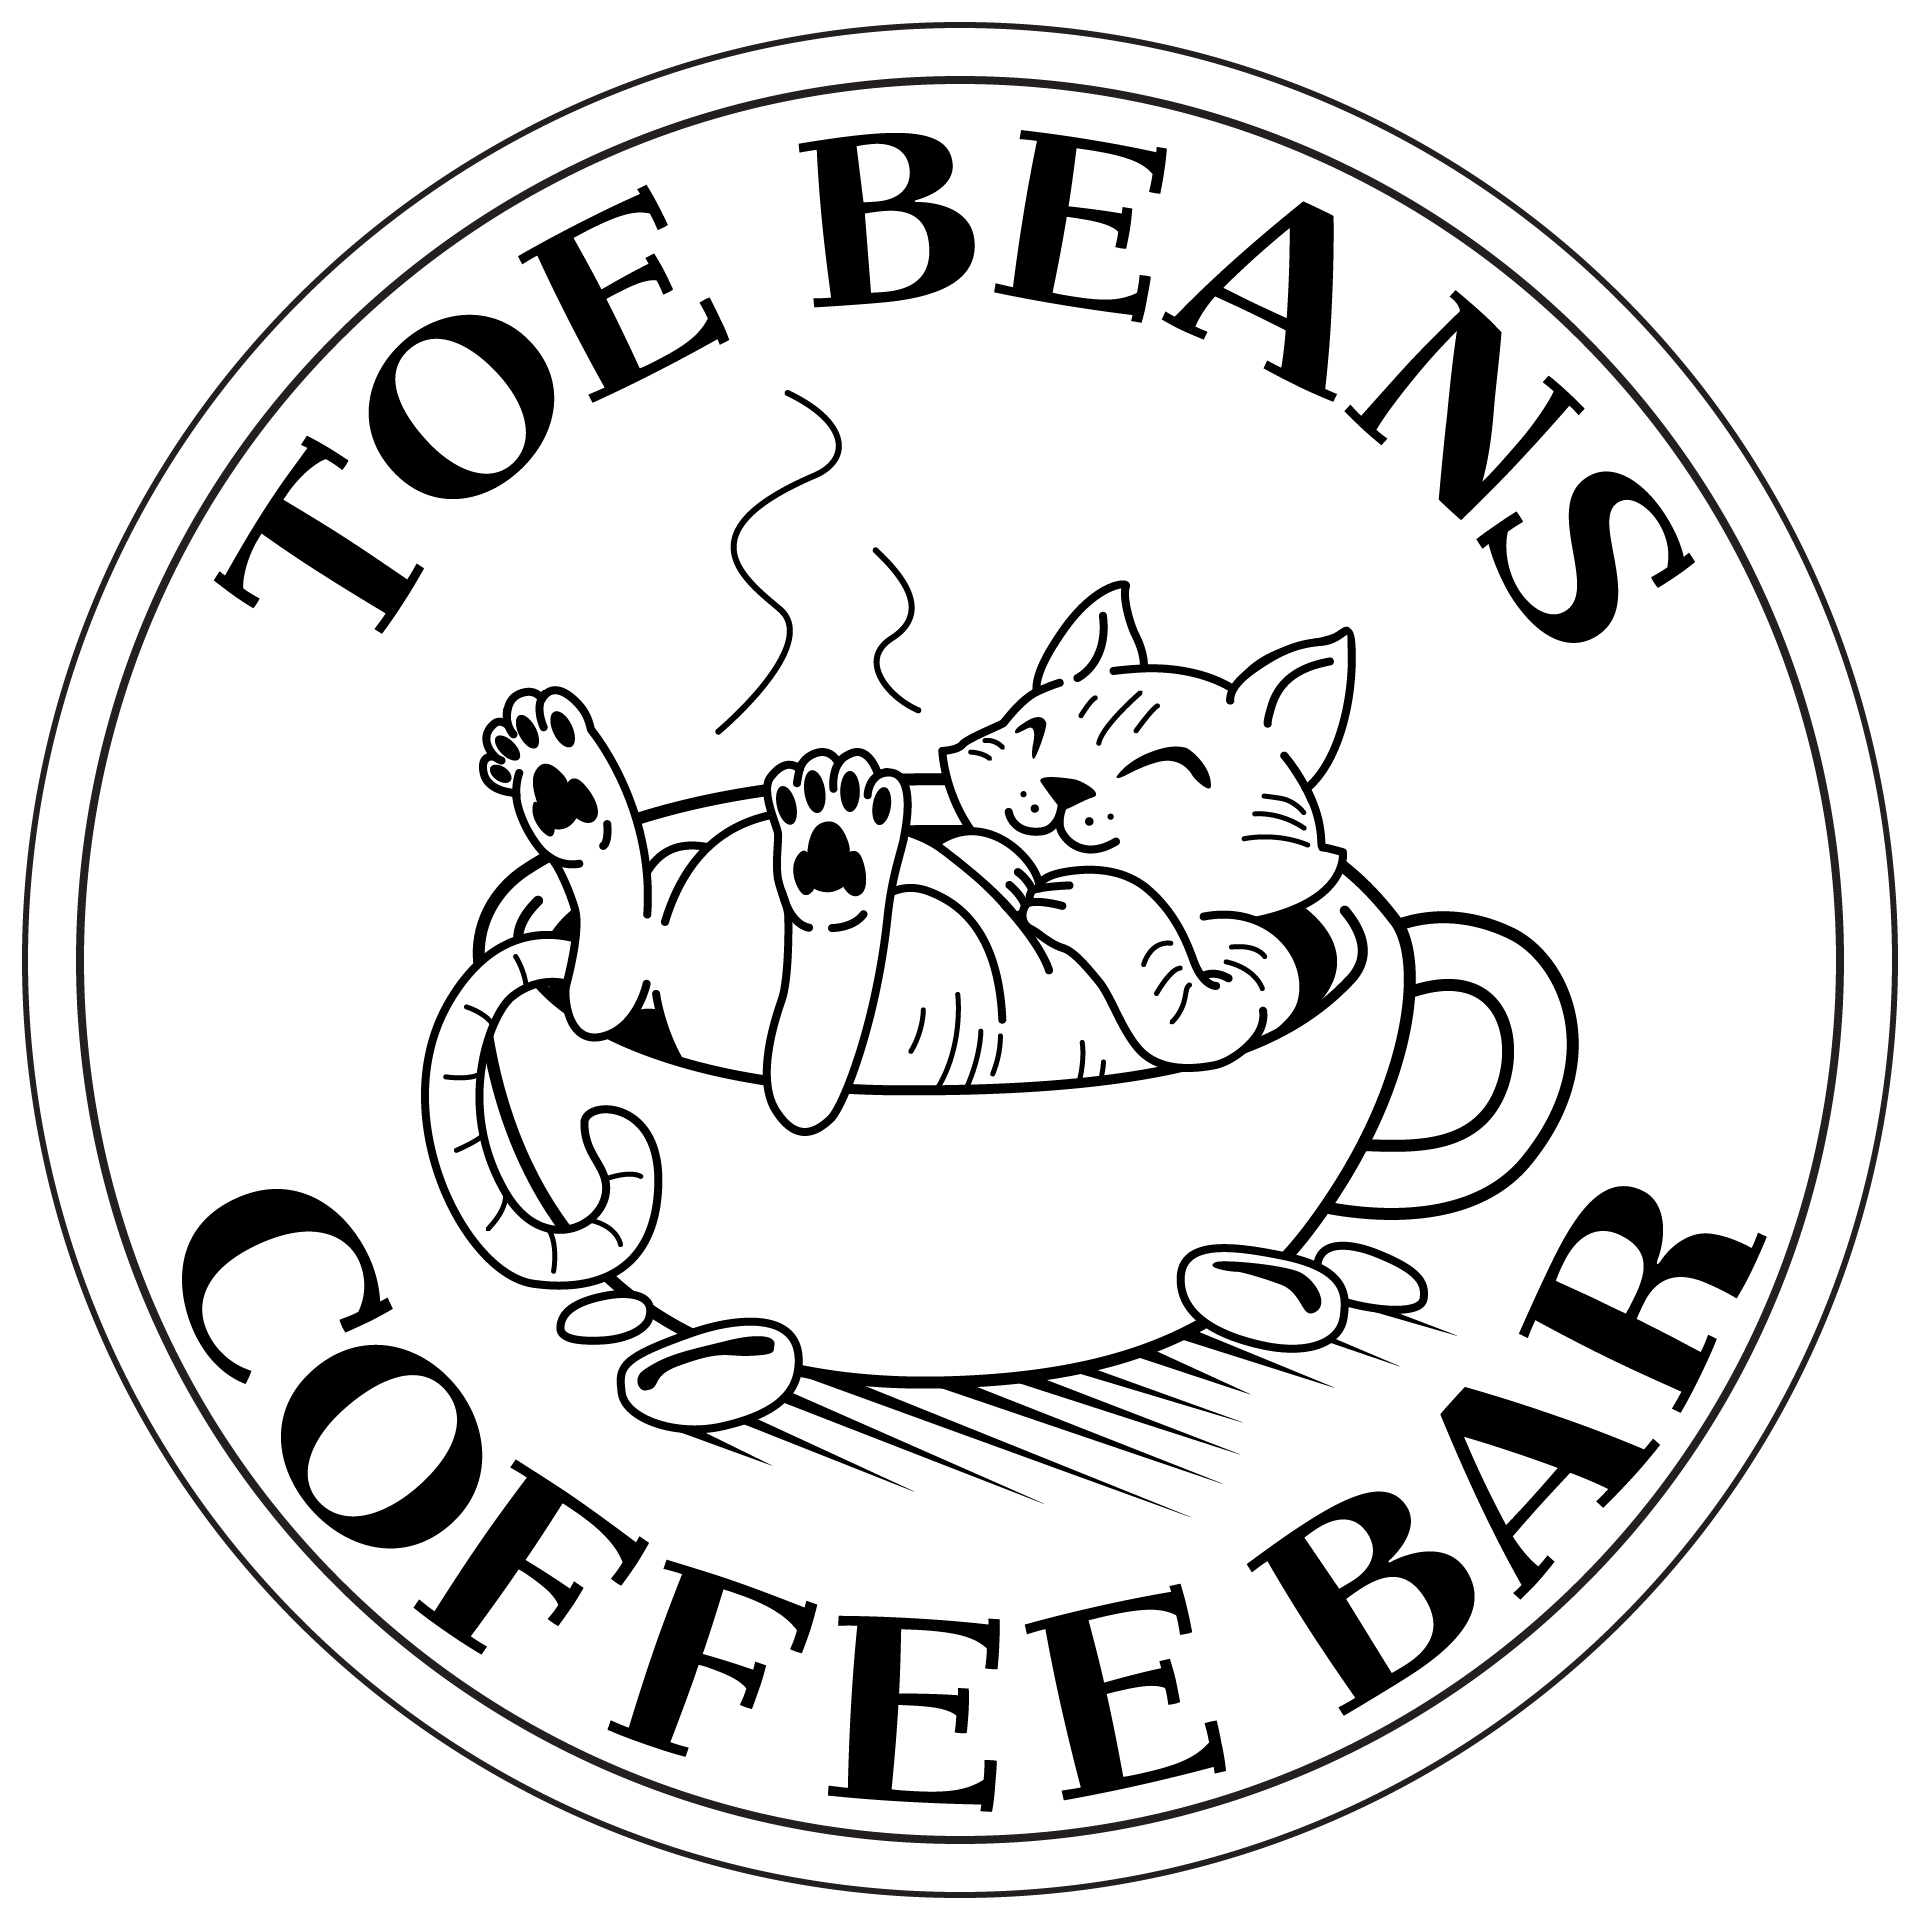 Toe Beans Coffee